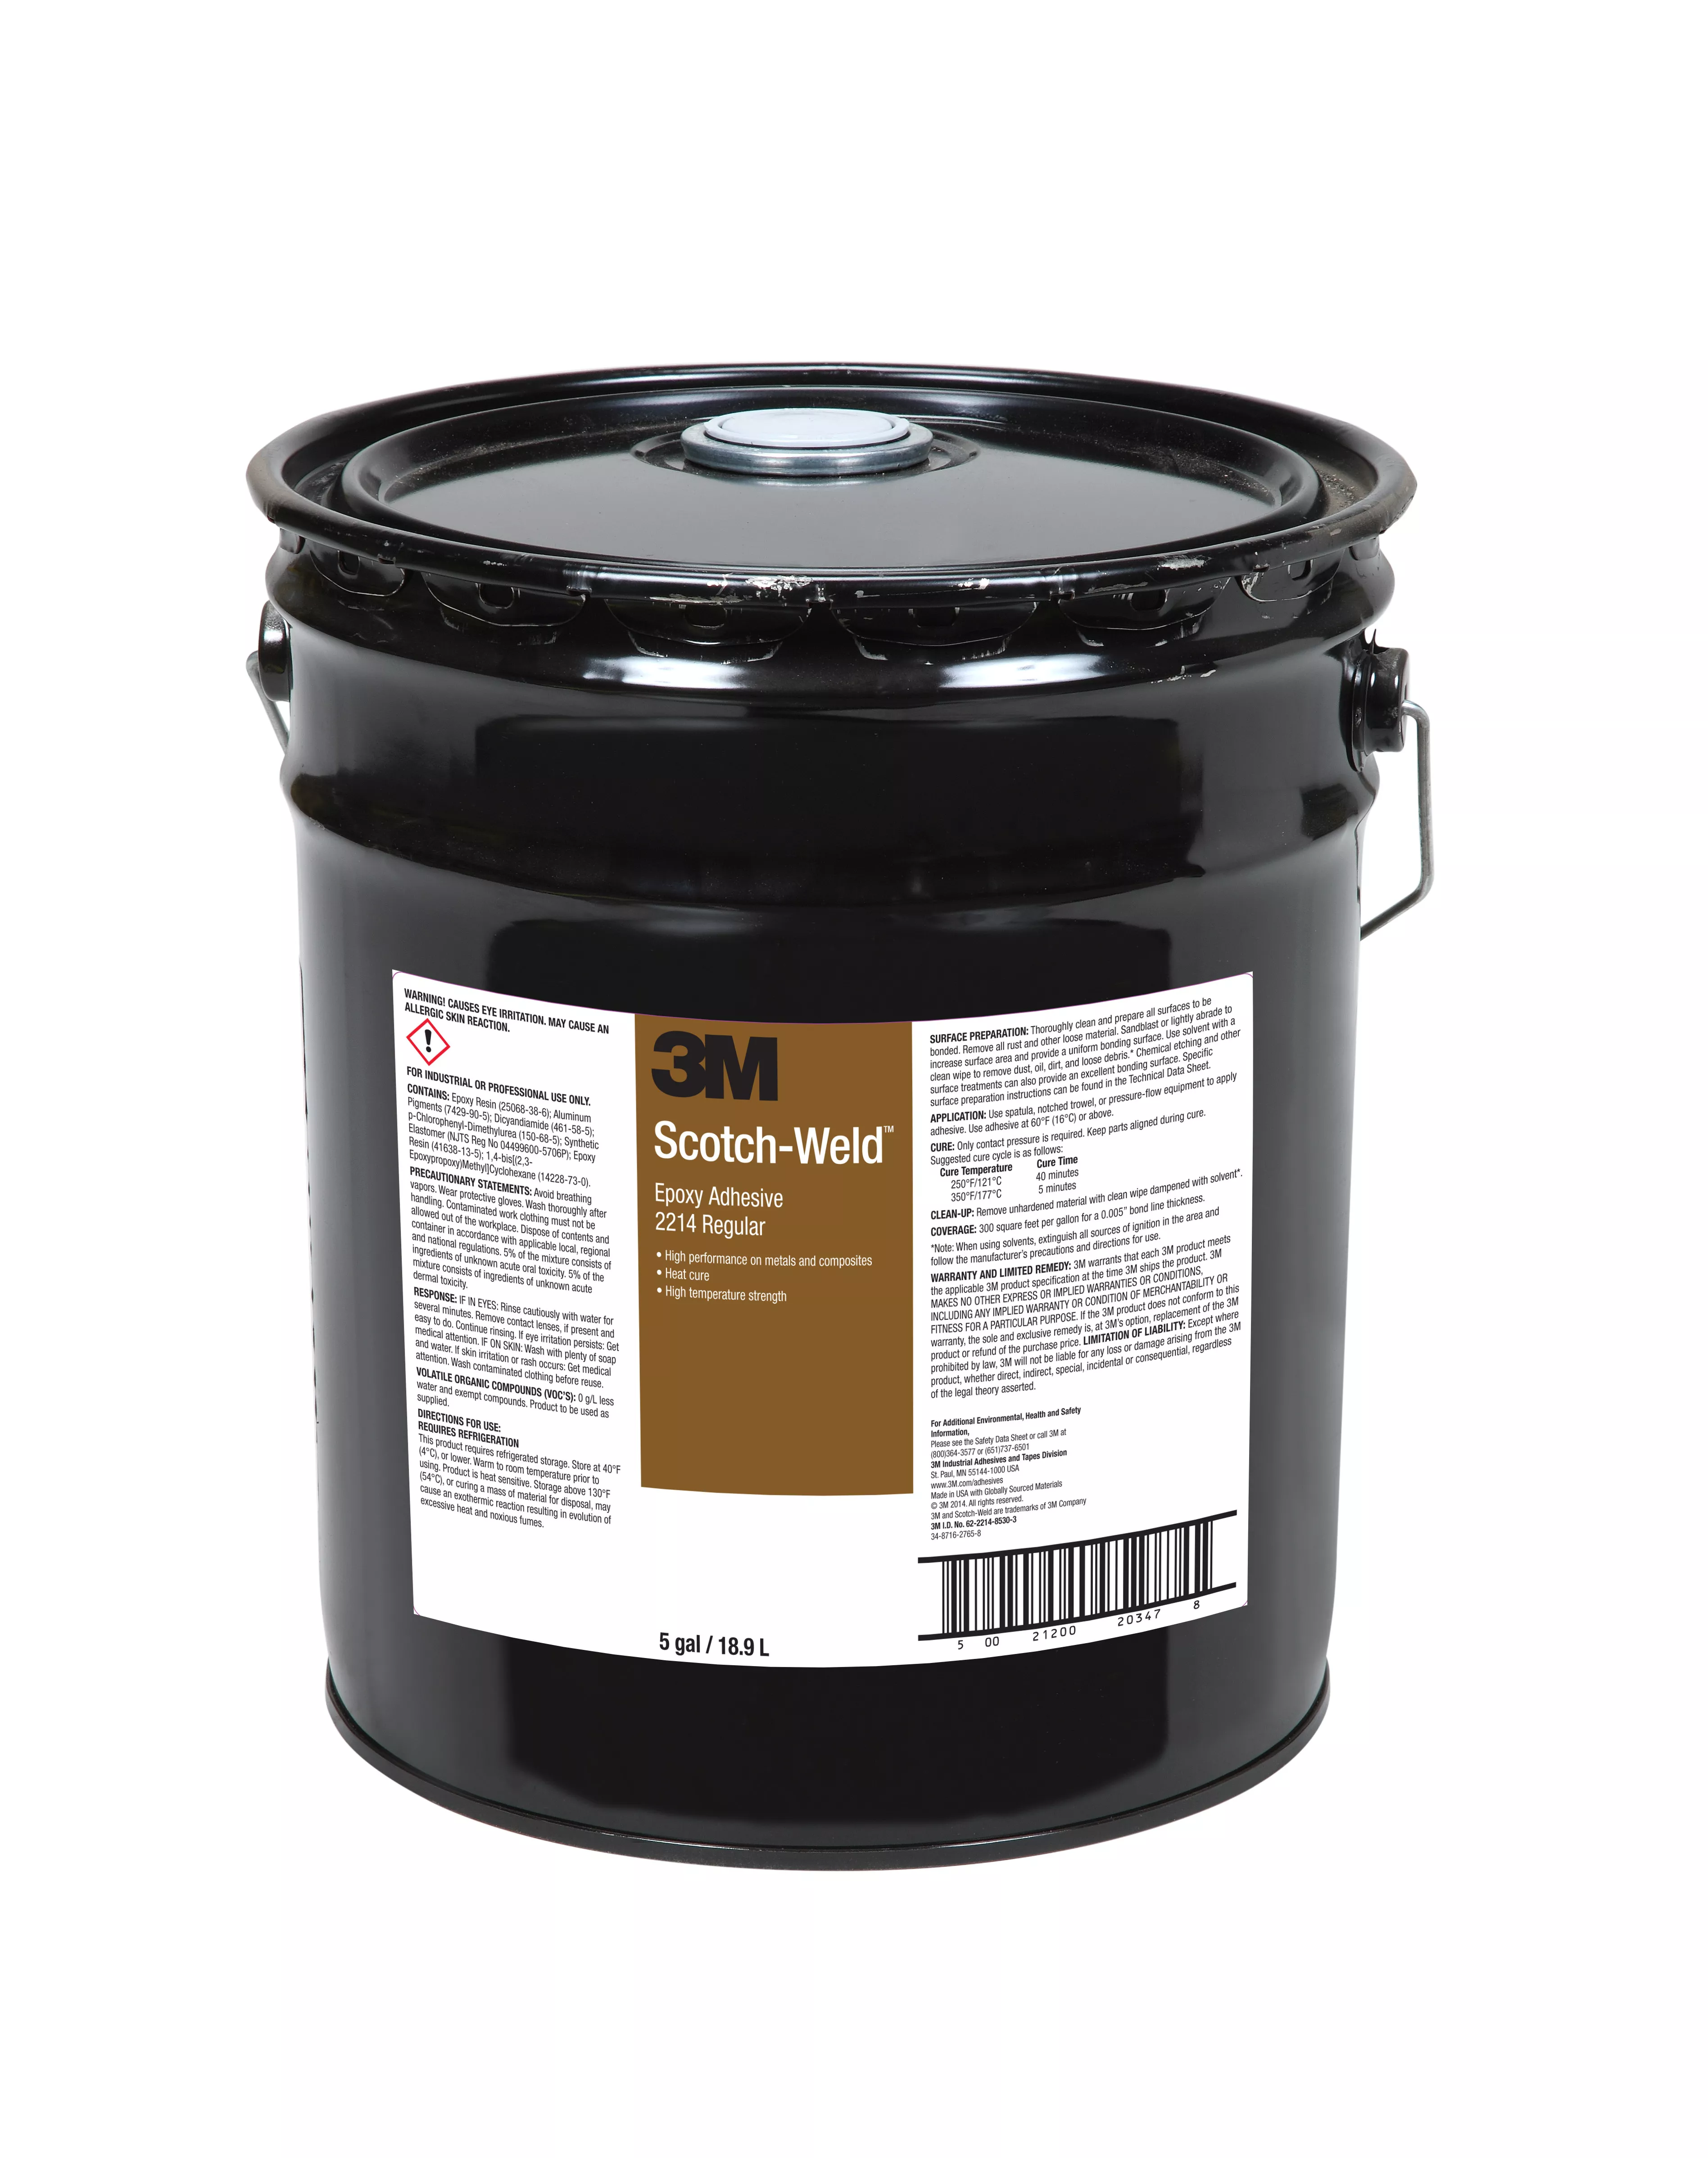 3M™ Scotch-Weld™ Epoxy Adhesive 2214, Regular, Gray, 5 Gallon (Pail),
Drum